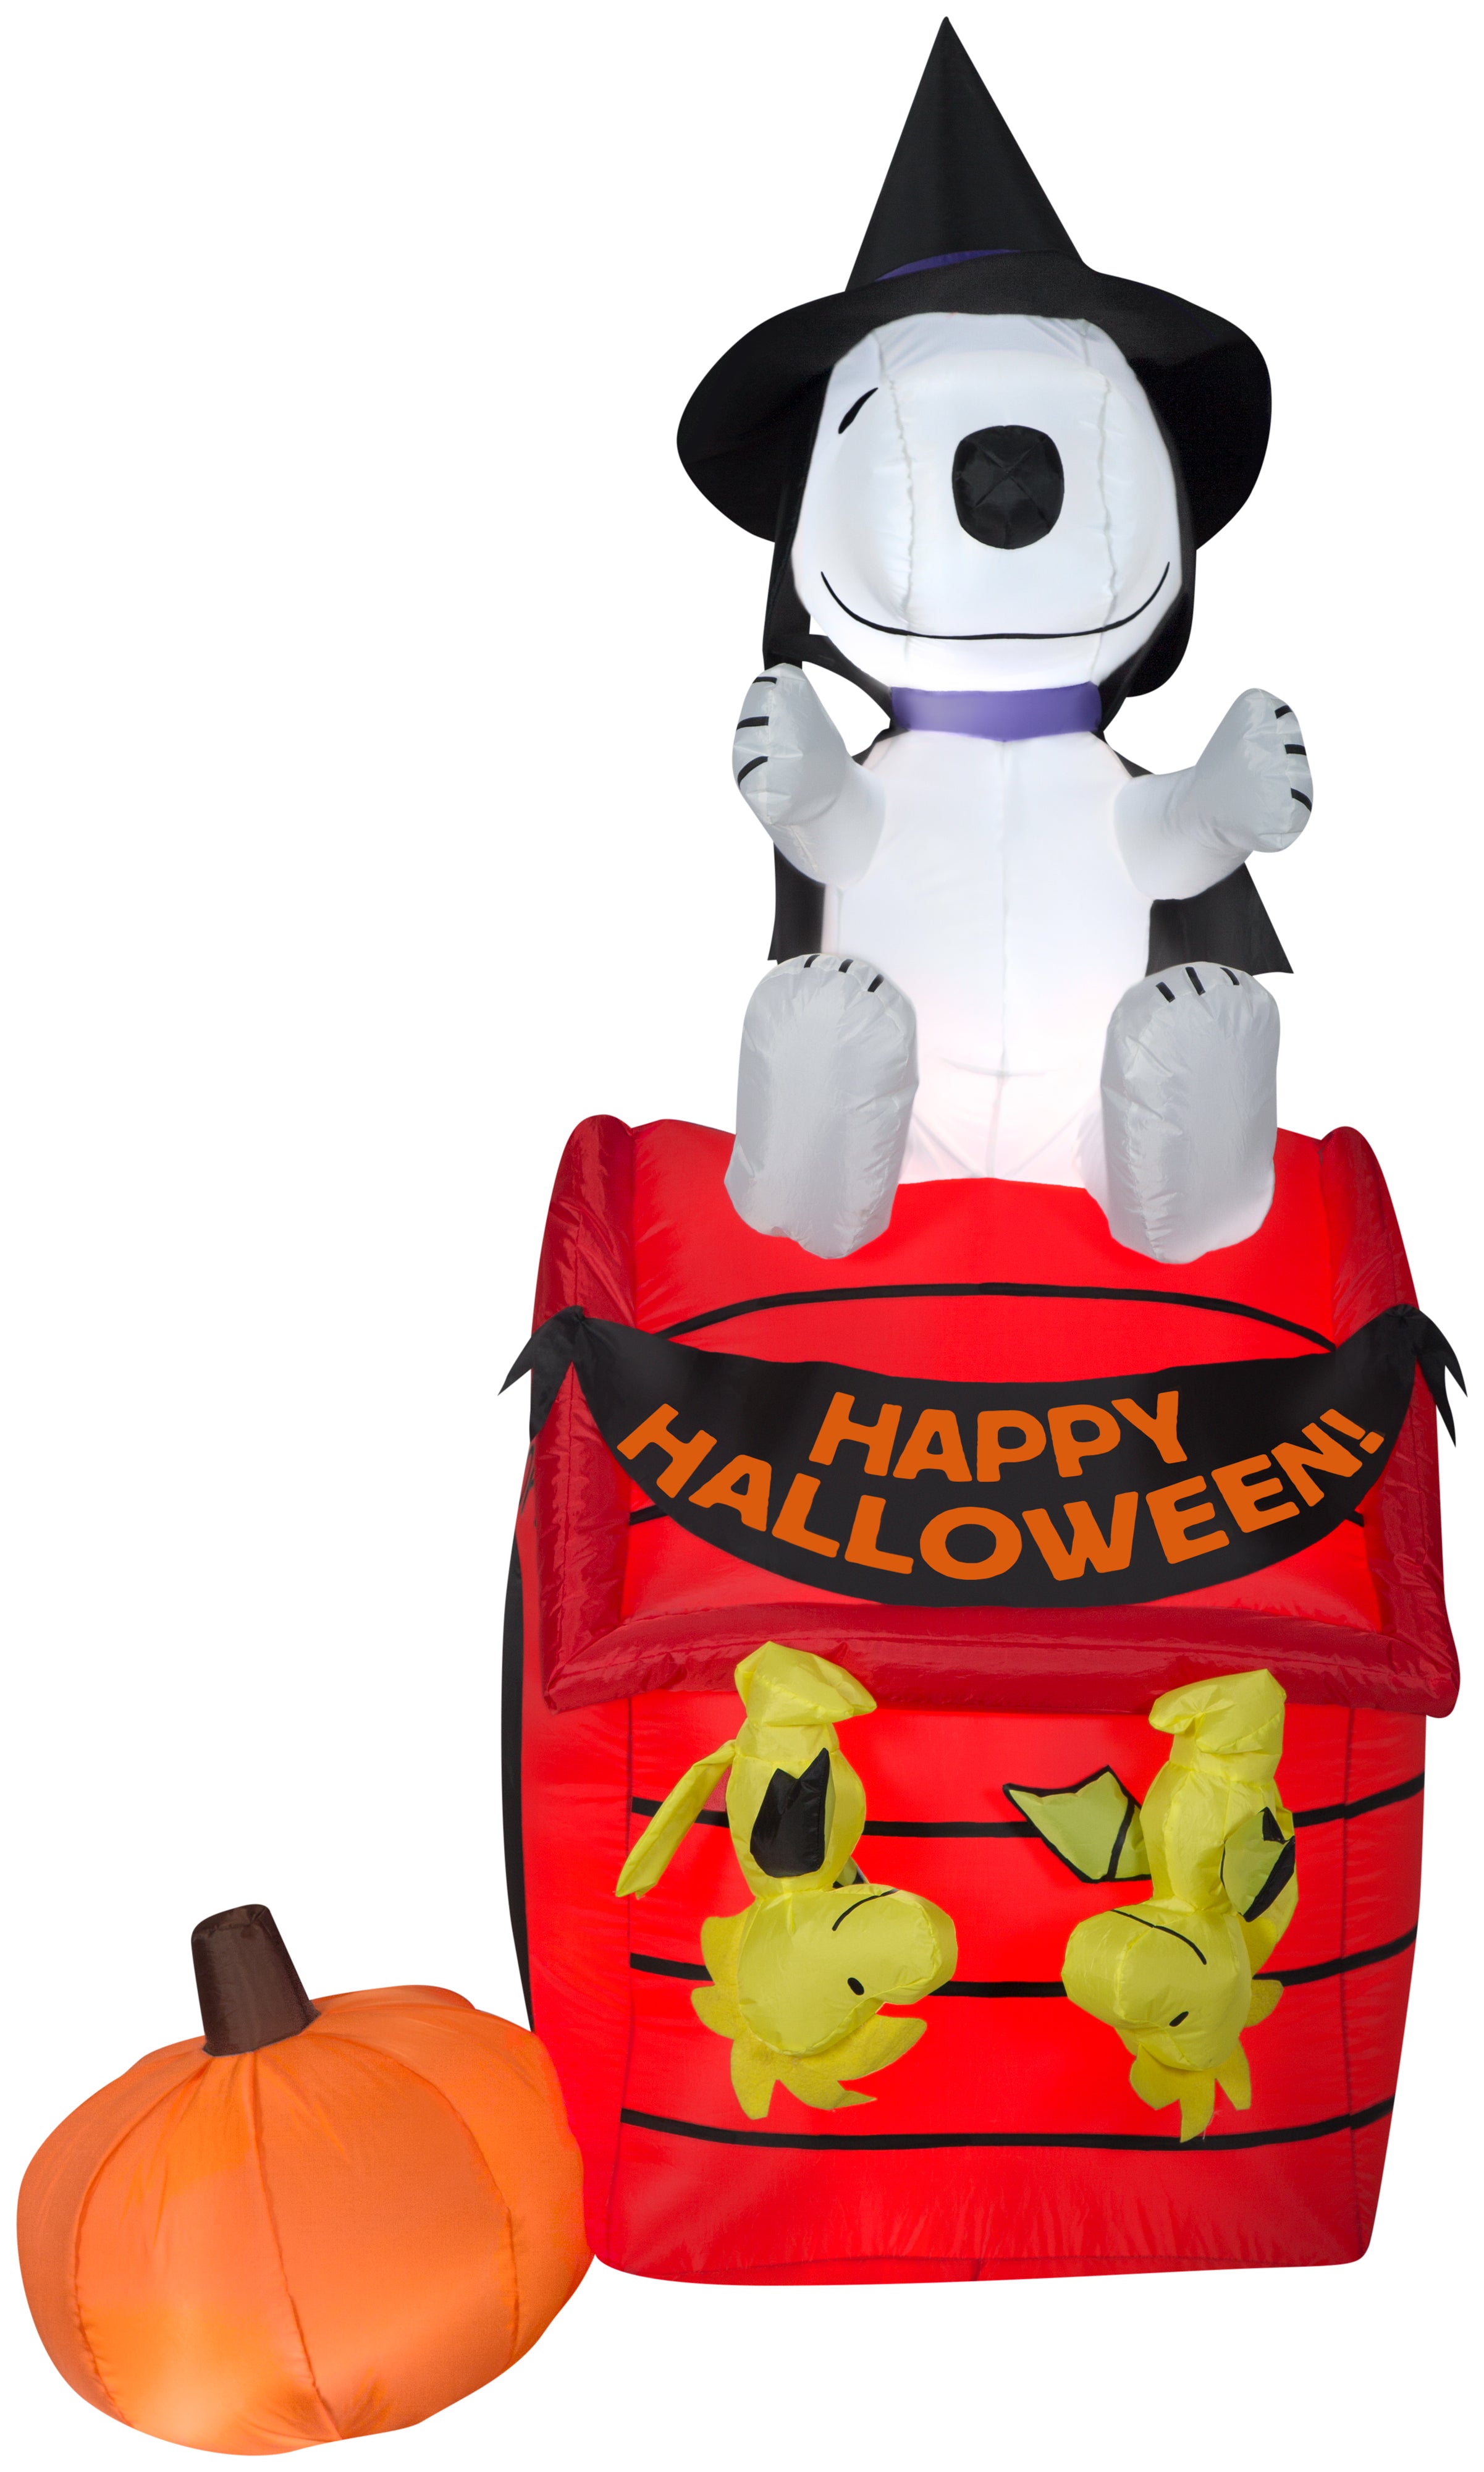 Gemmy Airblown Snoopy Halloween House w/LEDs Scene Peanuts, 6 ft Tall, Multi